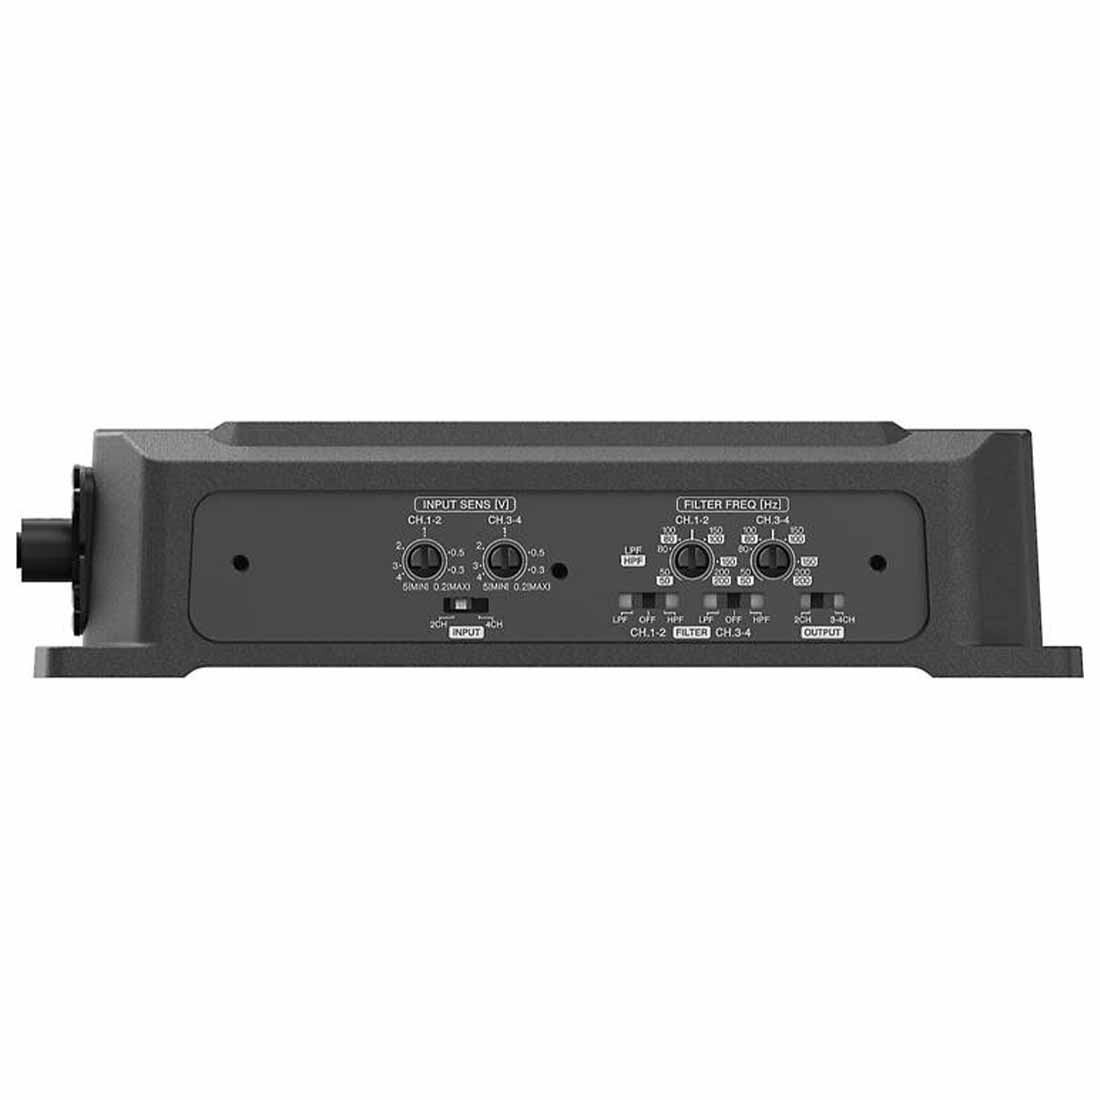 Kenwood KAC-M5014 Compact 4-Channel Powersports/Marine Digital Amplifier